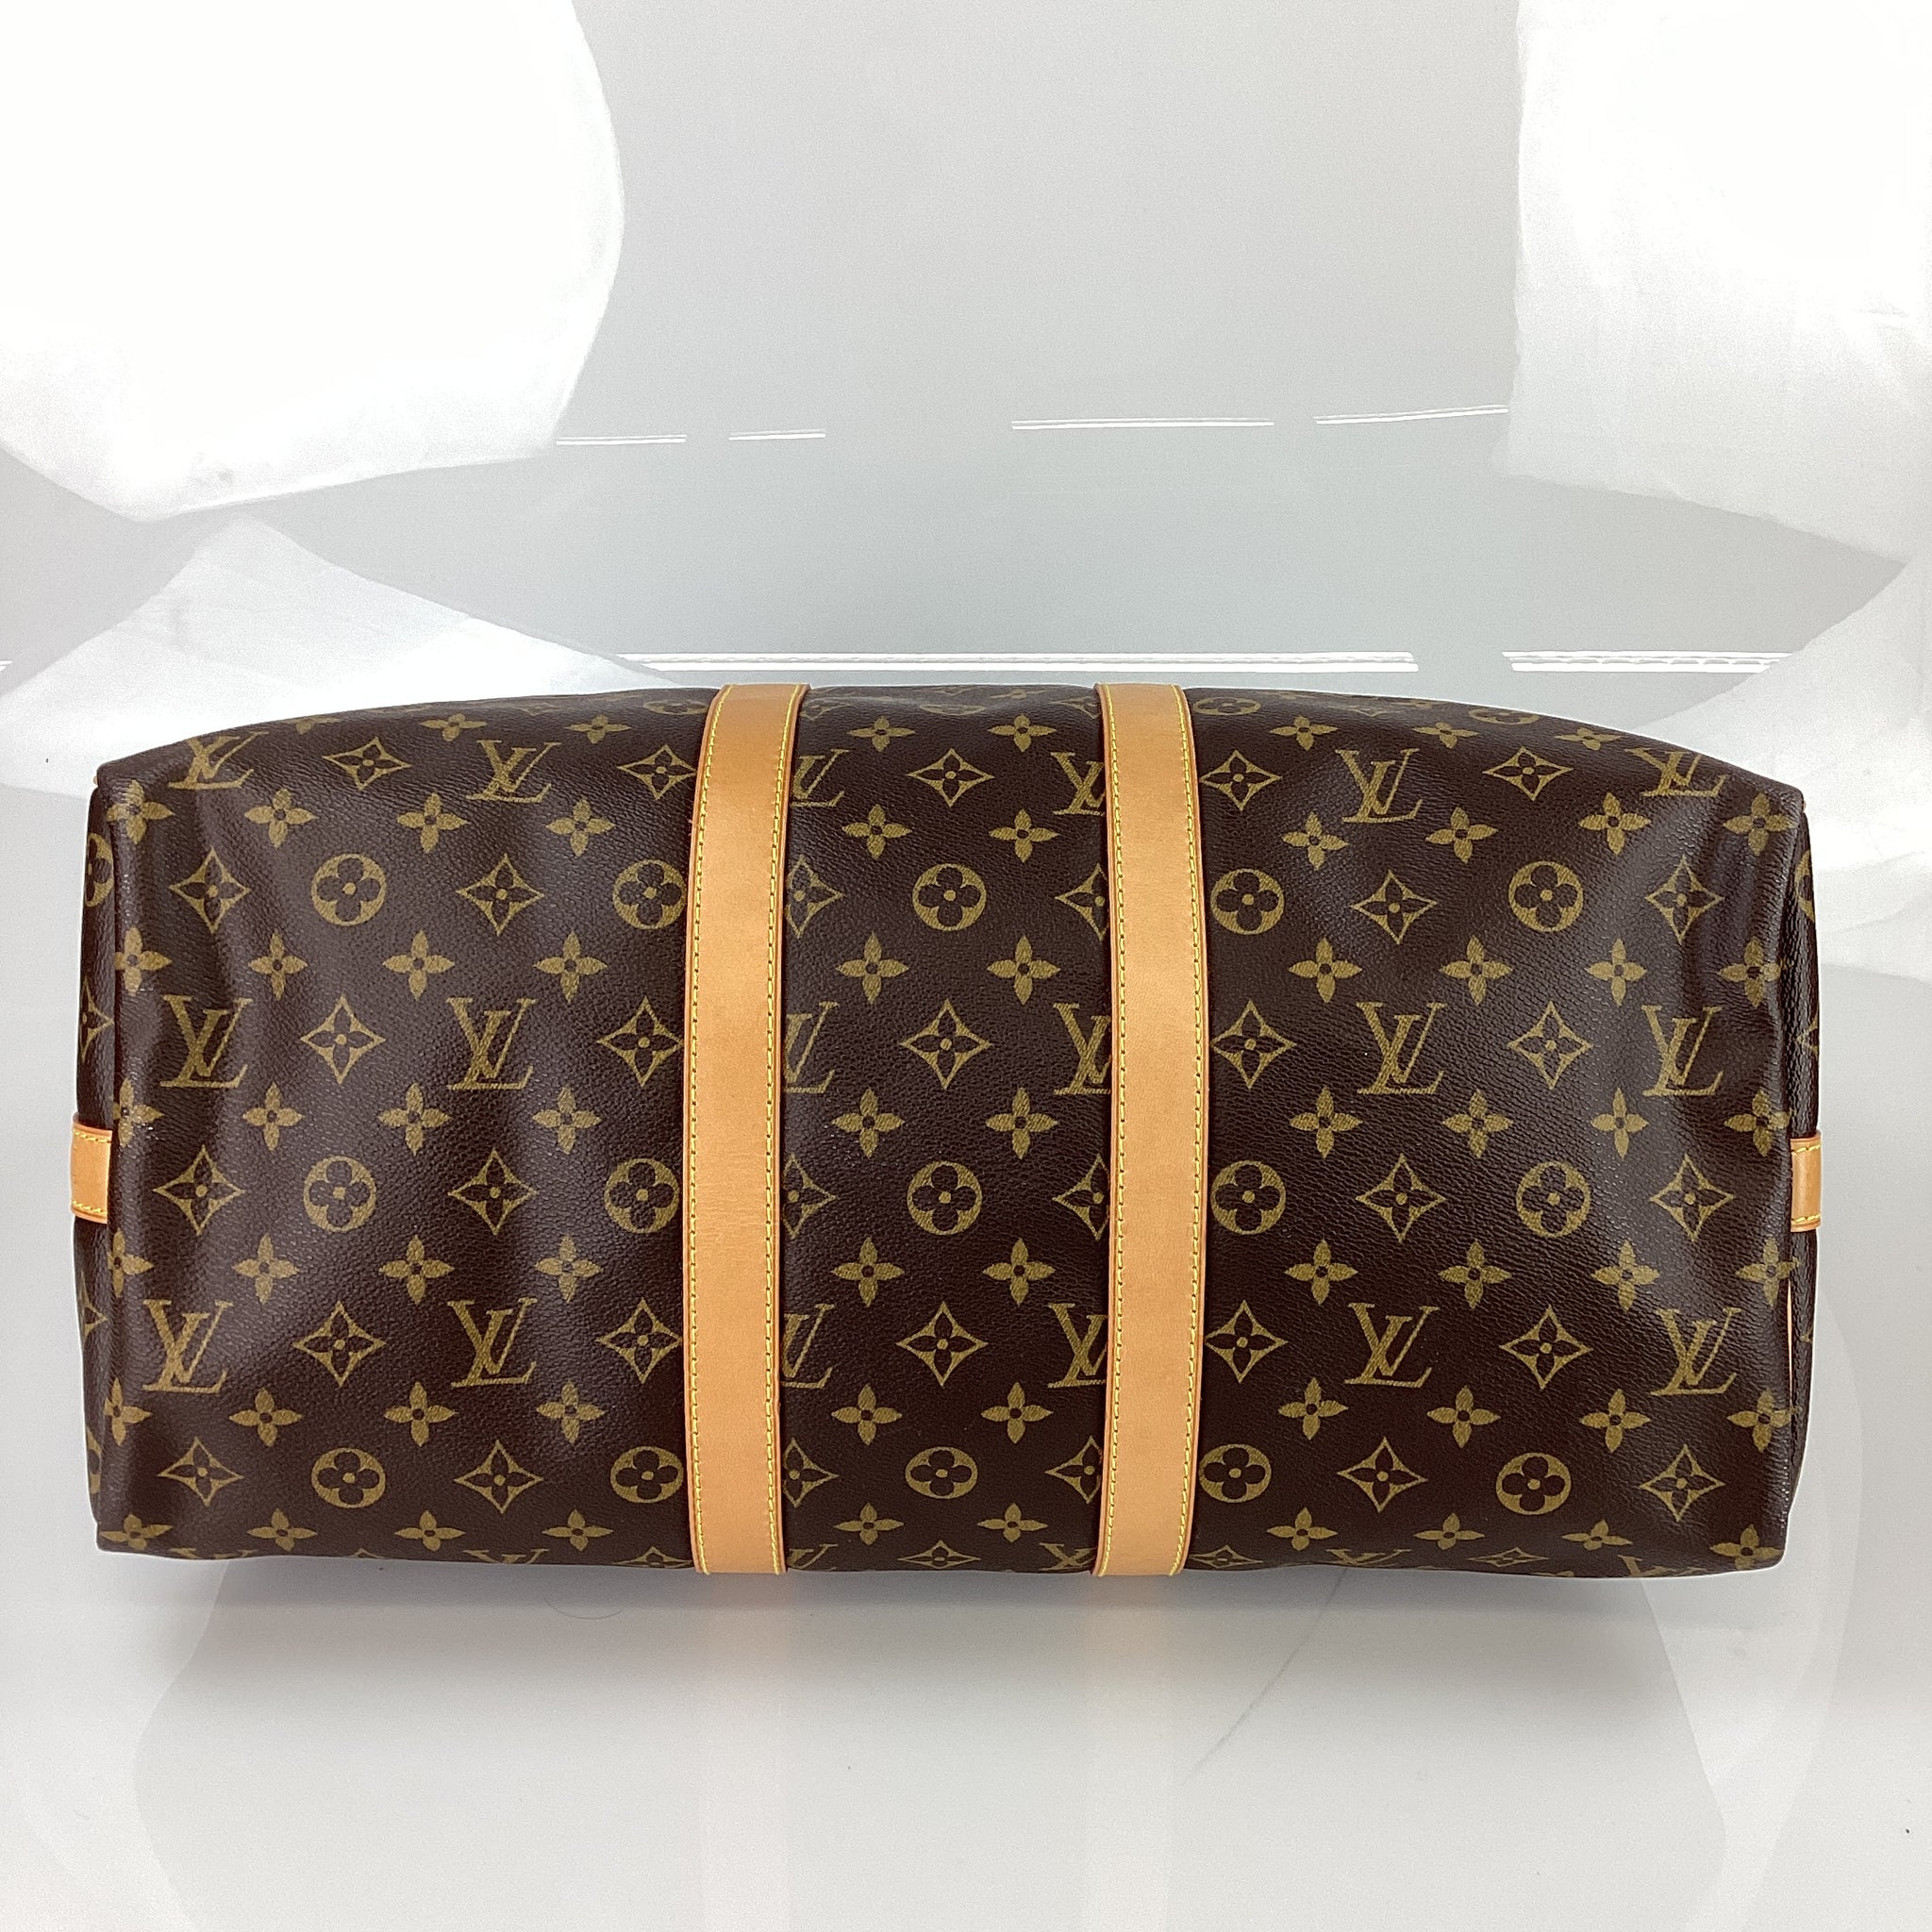 Preloved Louis Vuitton Keepall 45 Bandouliere Monogram Travel Bag RDM3D4V 050224 B